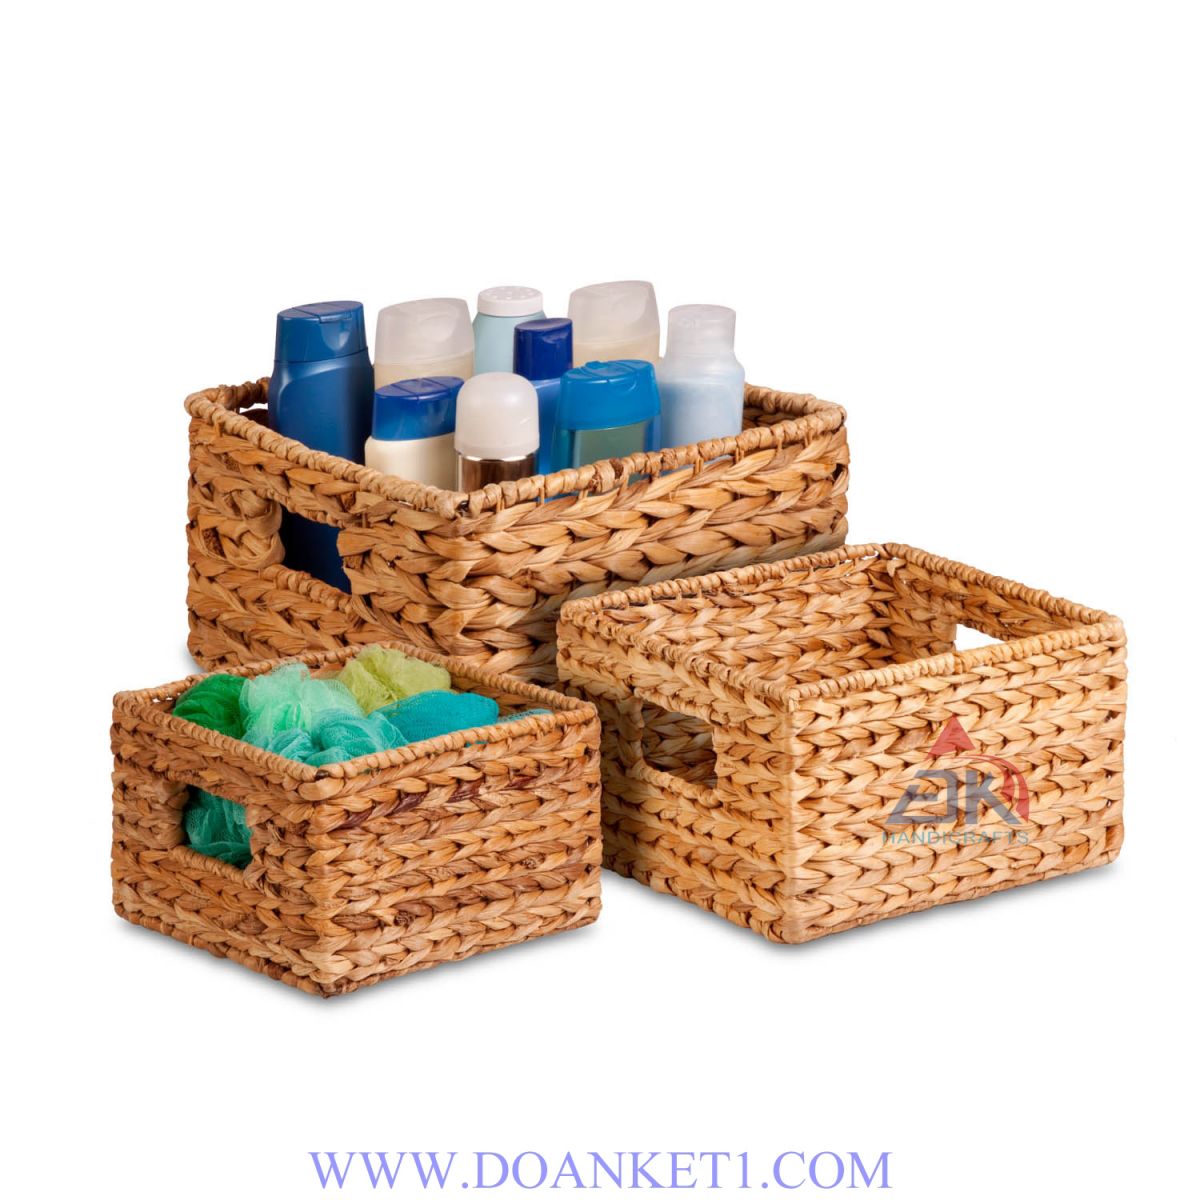 Water Hyacinth Basket S/3 # DK306